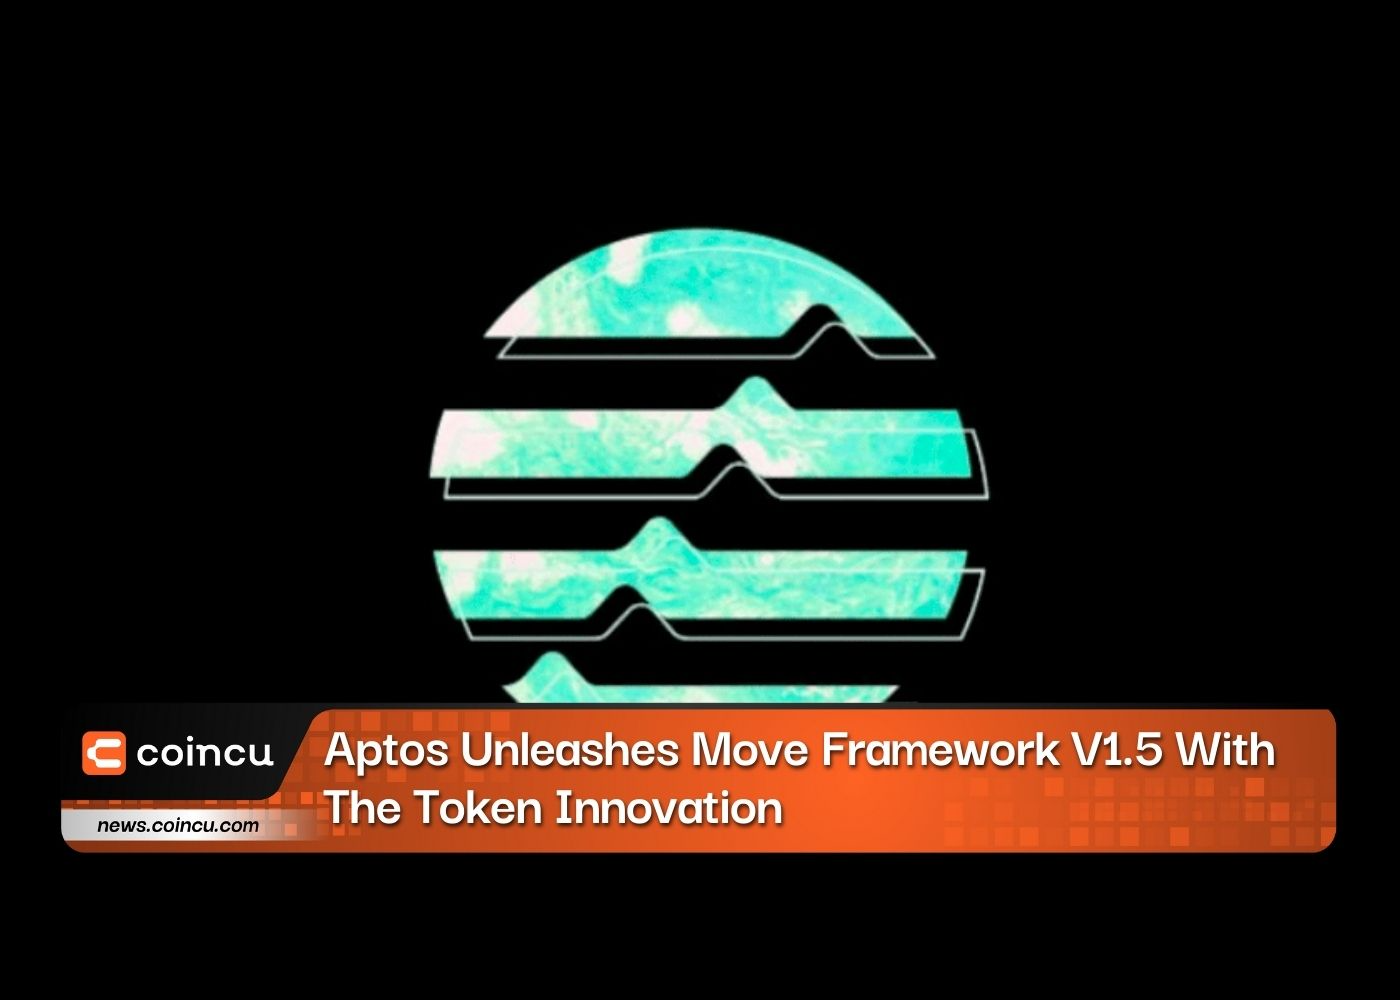 Aptos lance Move Framework V1.5 avec l'innovation Token